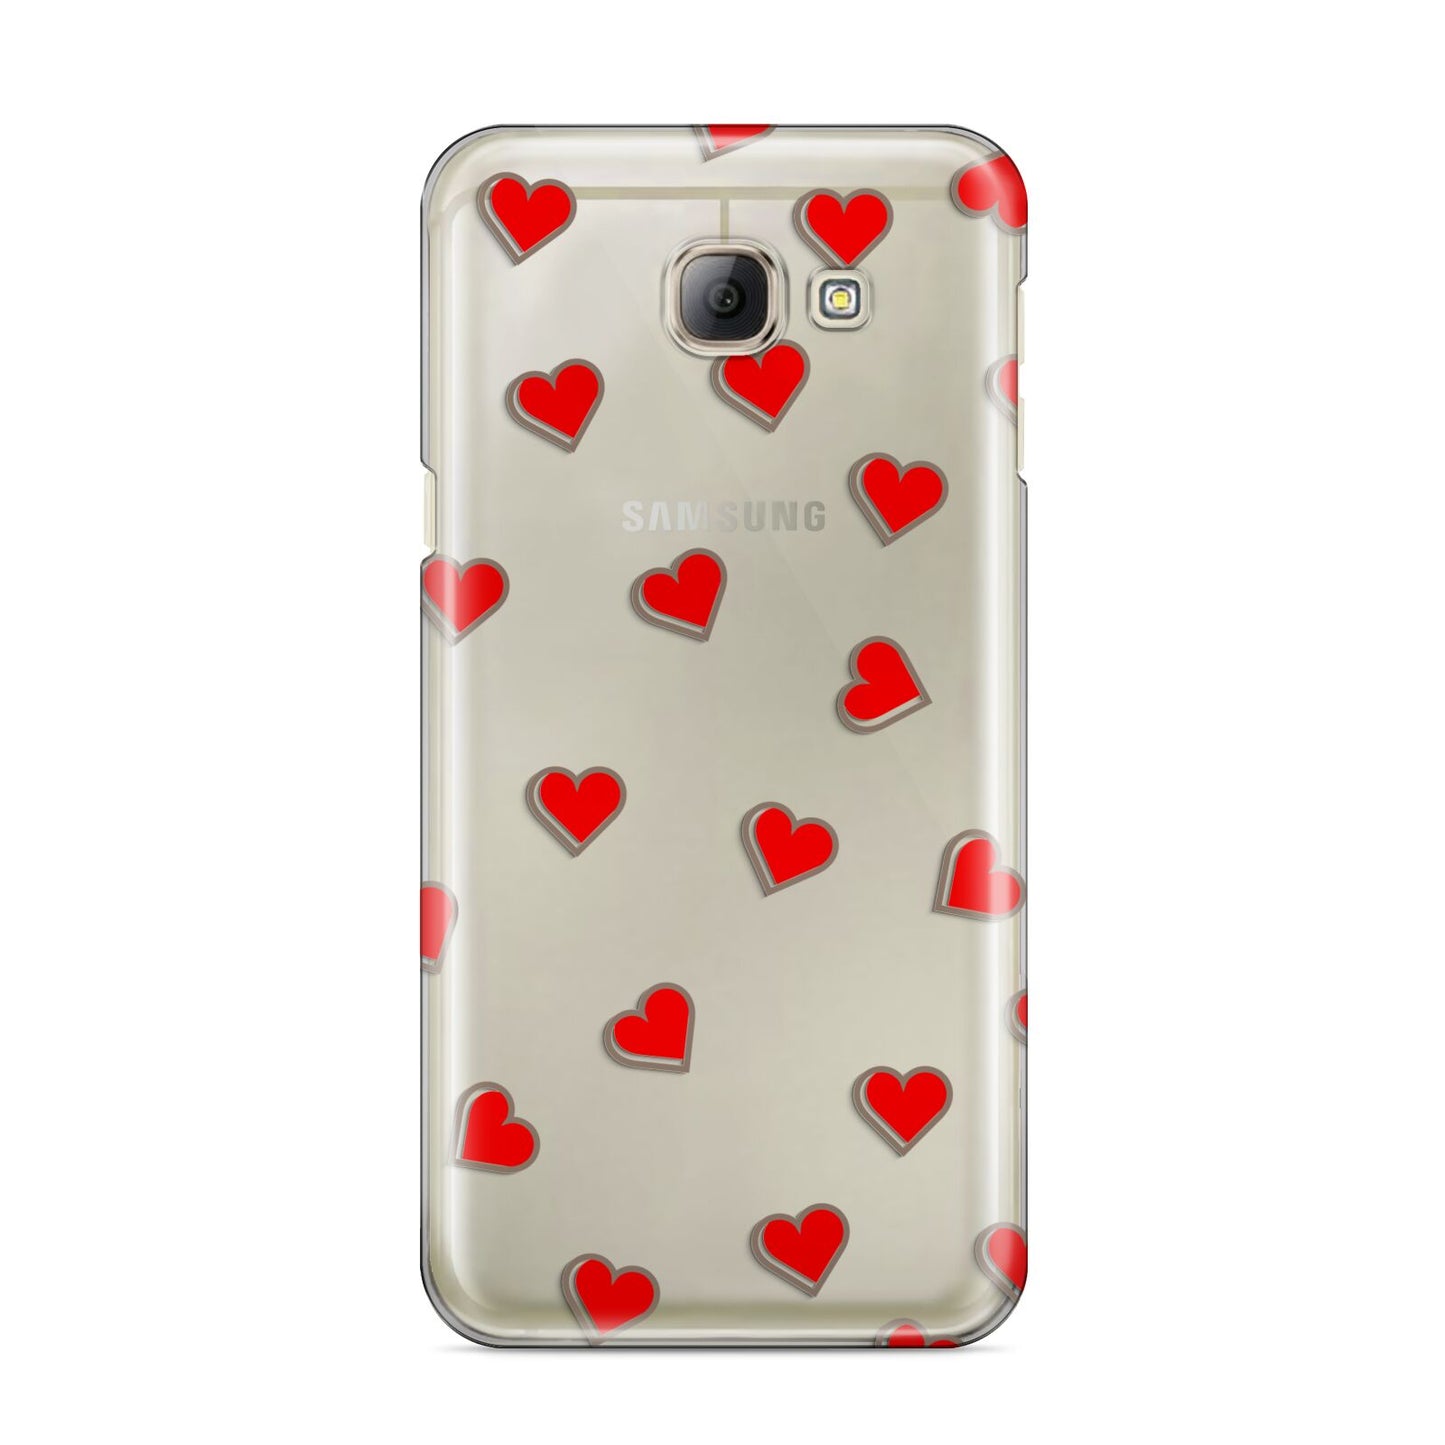 Cute Red Hearts Samsung Galaxy A8 2016 Case